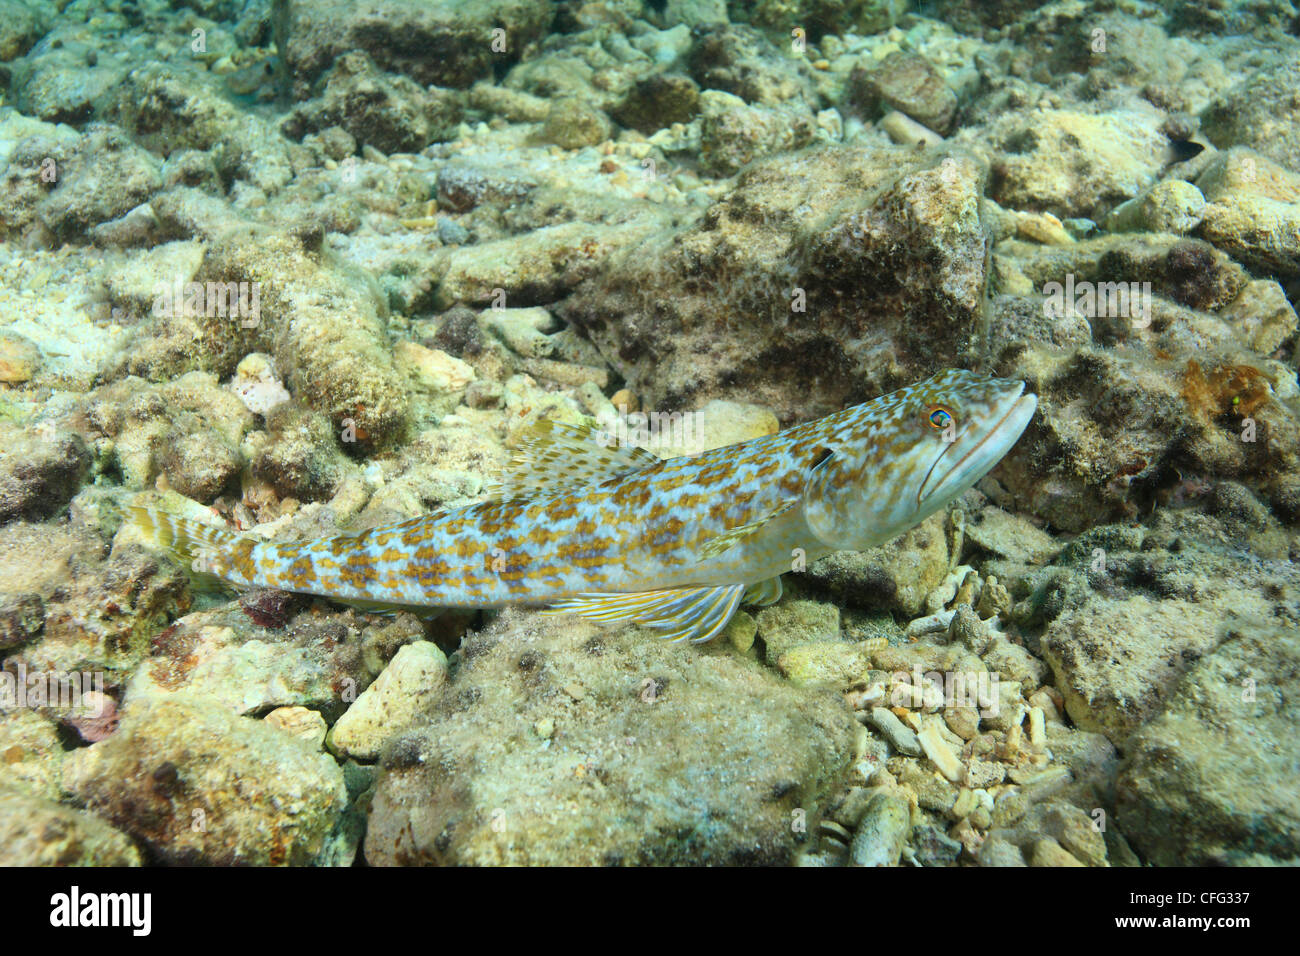 Sand diver or lizard fish, Synodus intermedius, on coral rubble. Stock Photo